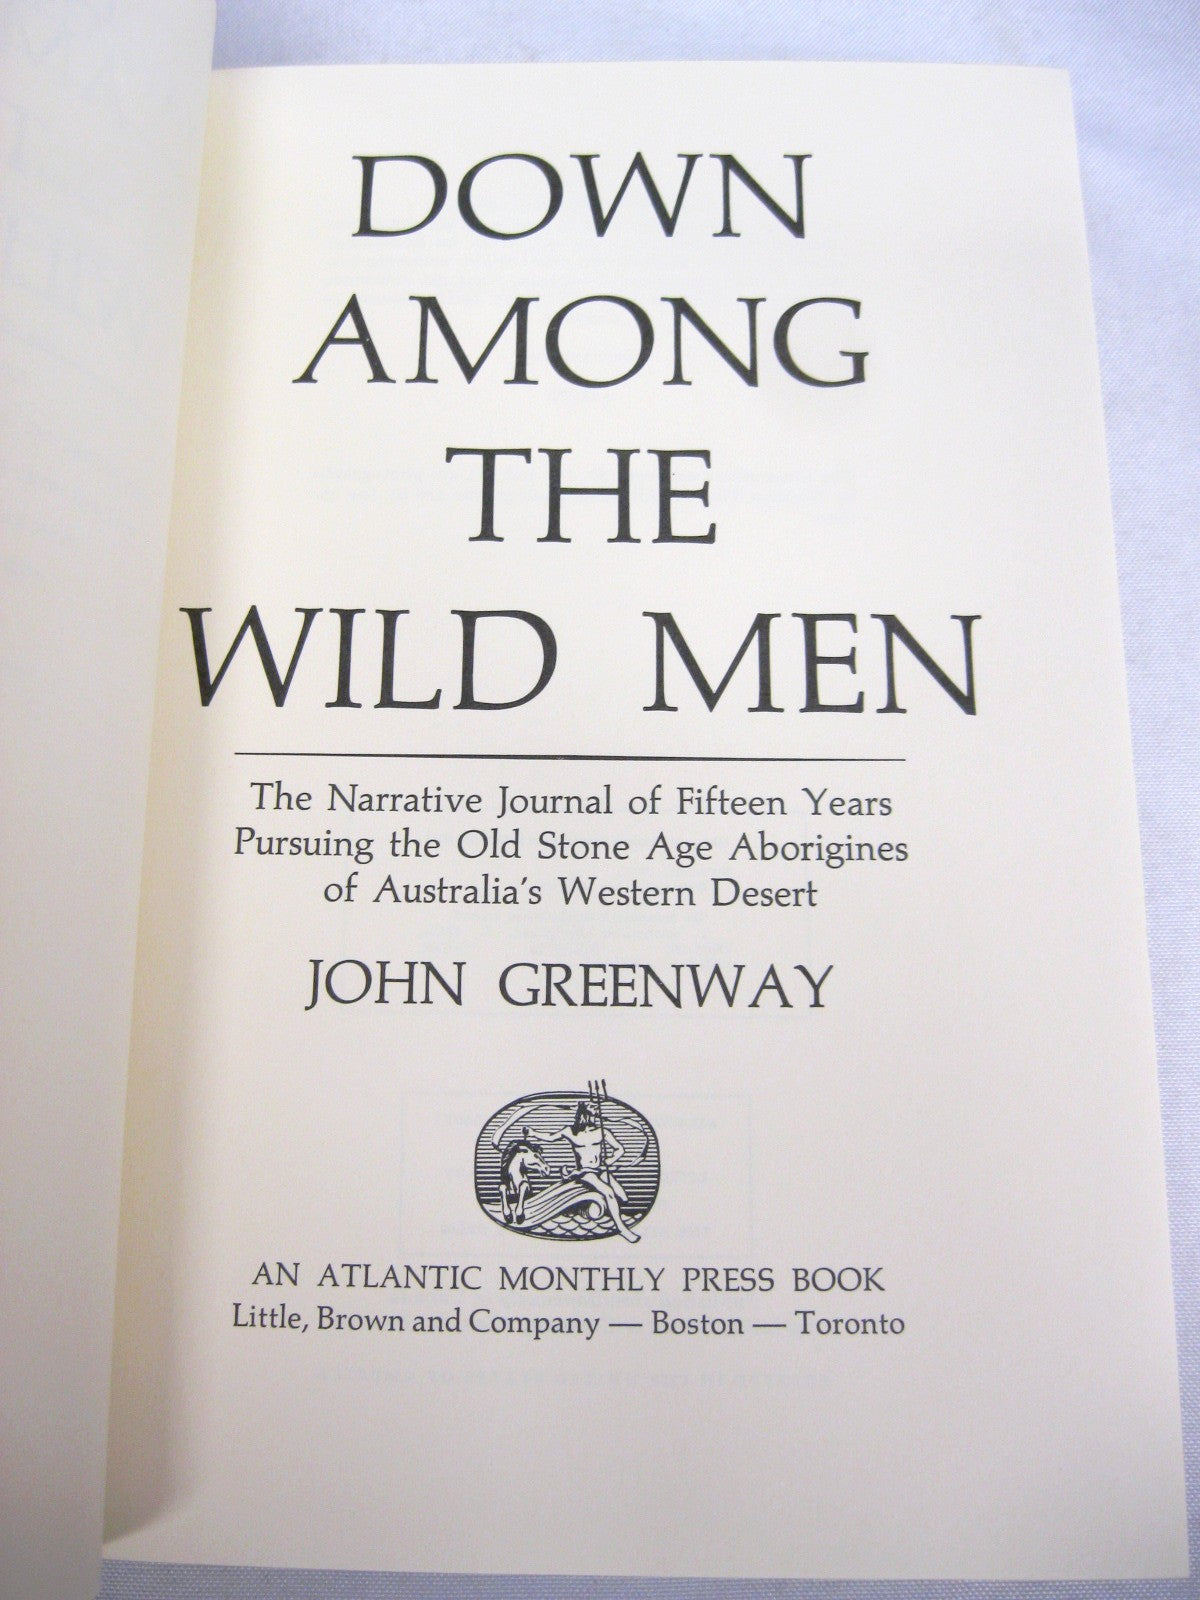 Down Among The Wild Men by John Greenaway